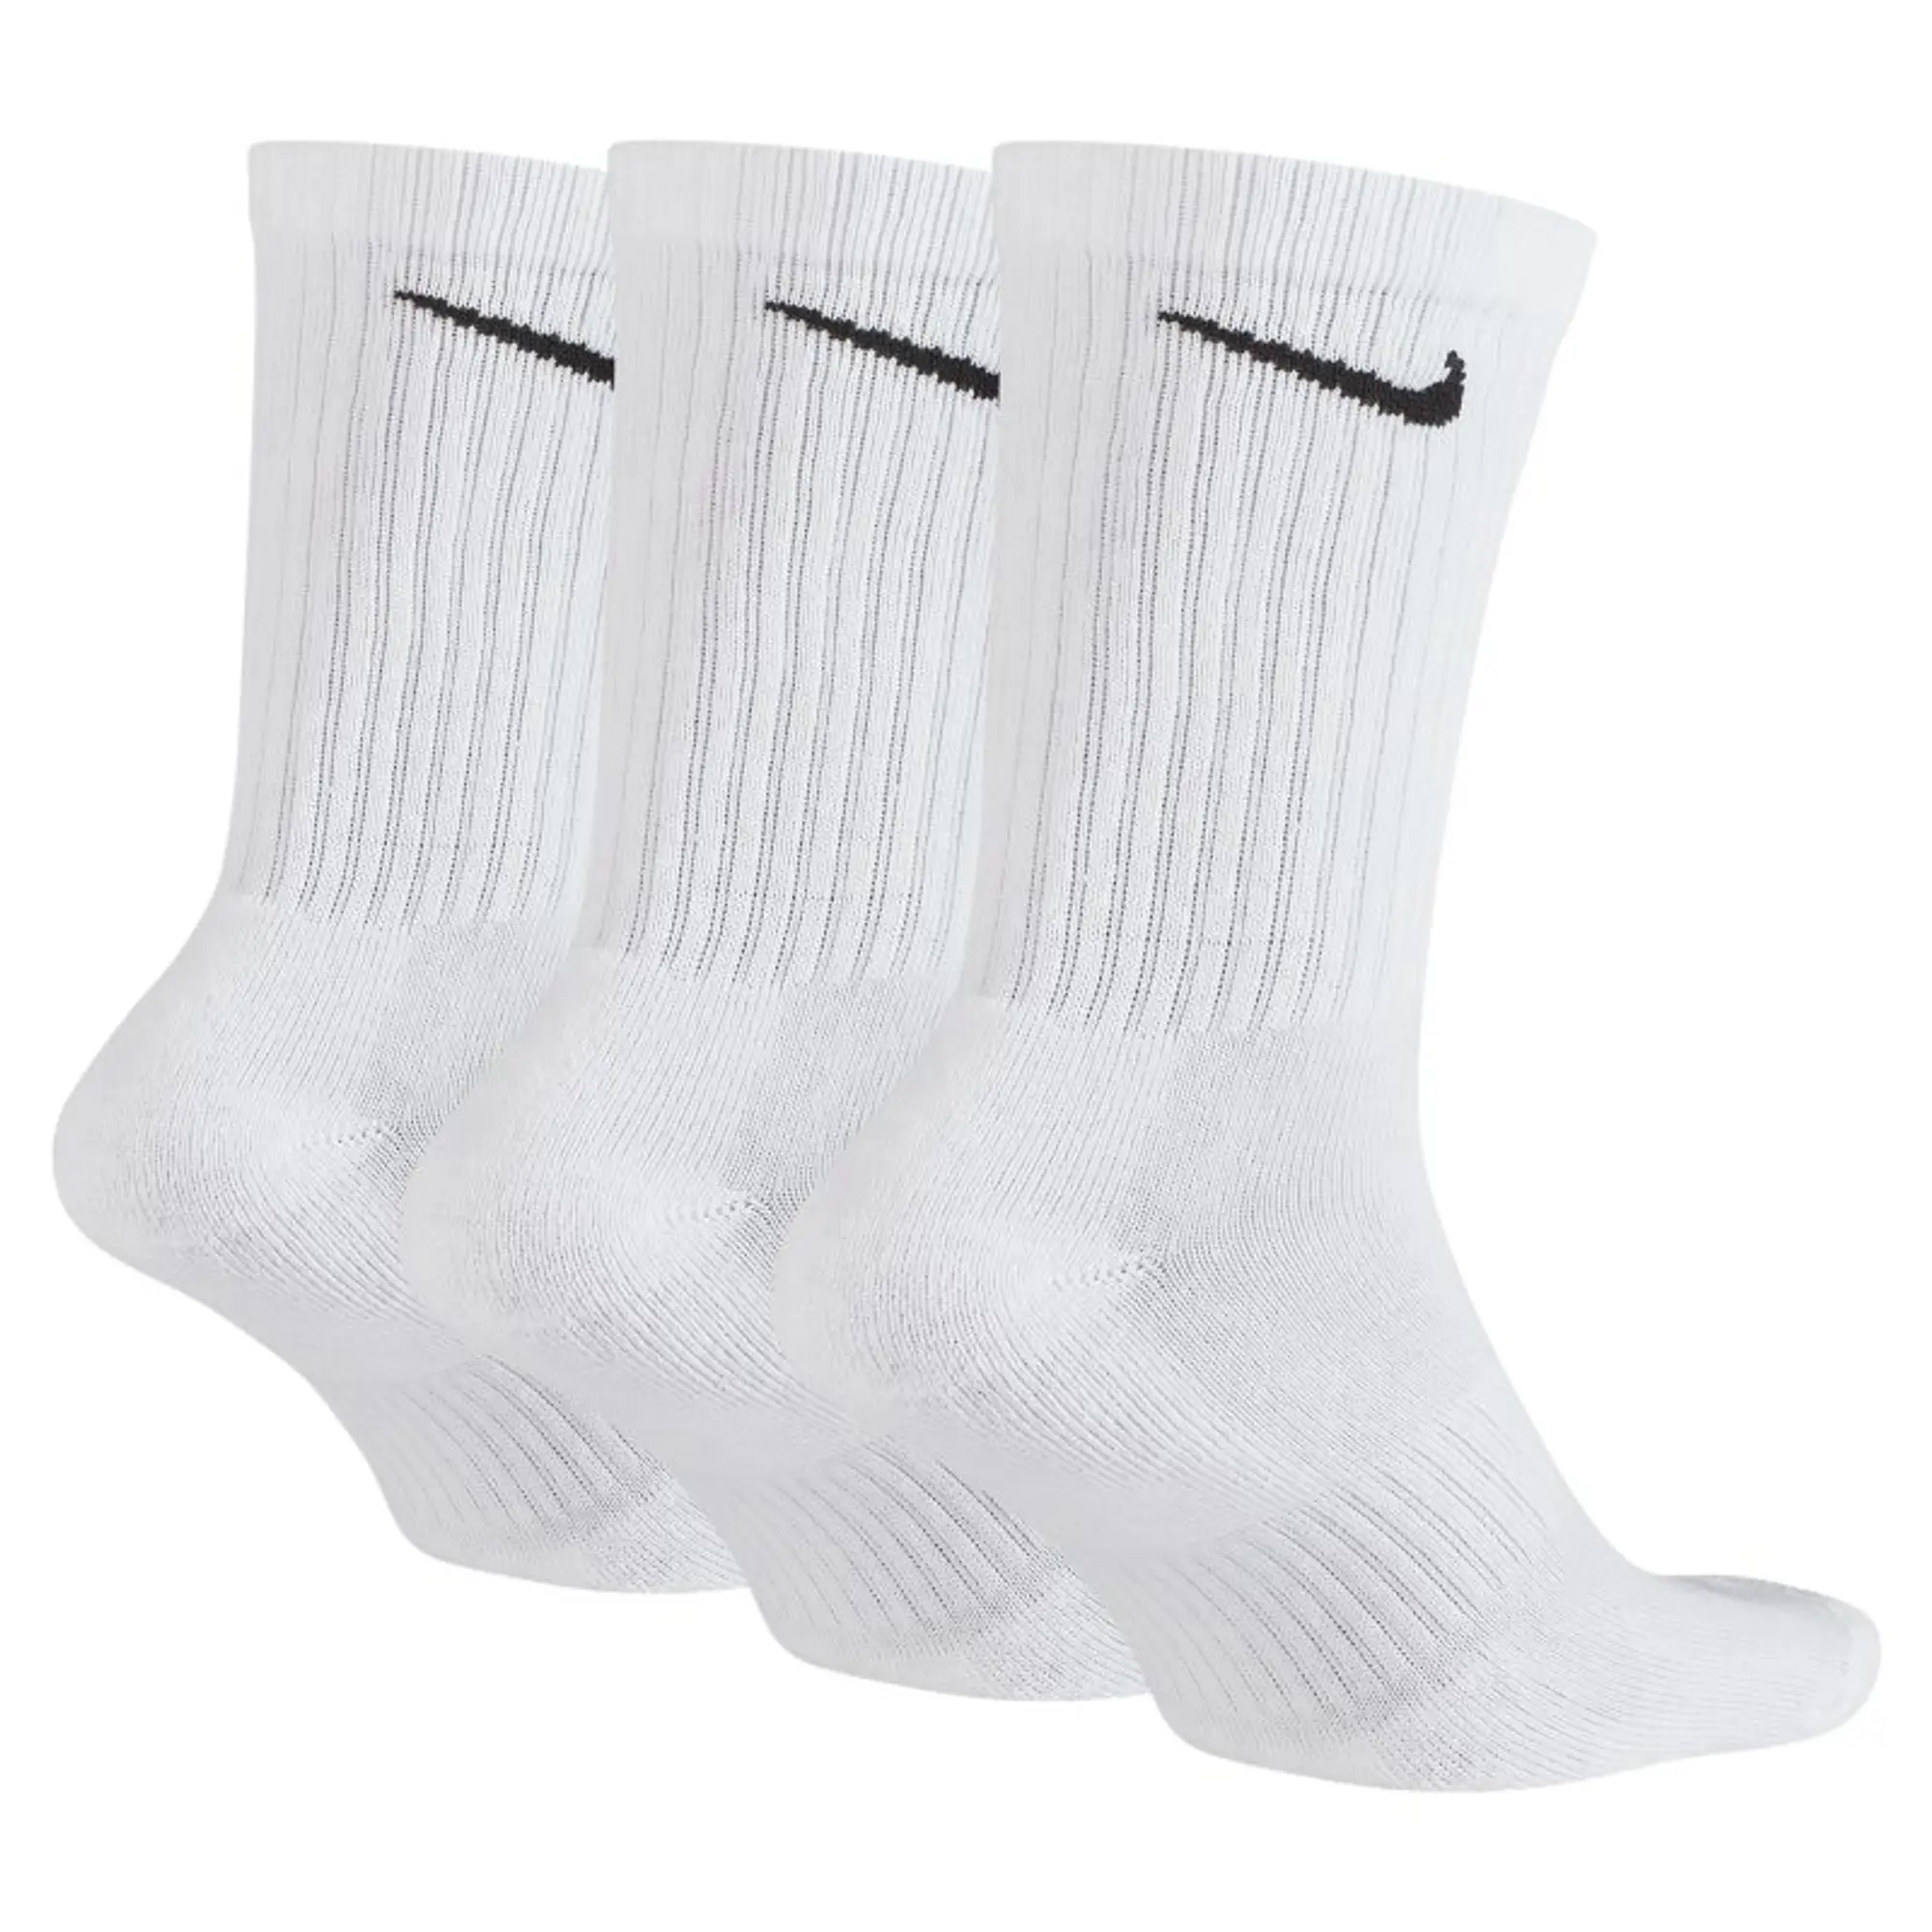 Nike Everyday Cushion Crew Socks (3 Pack)